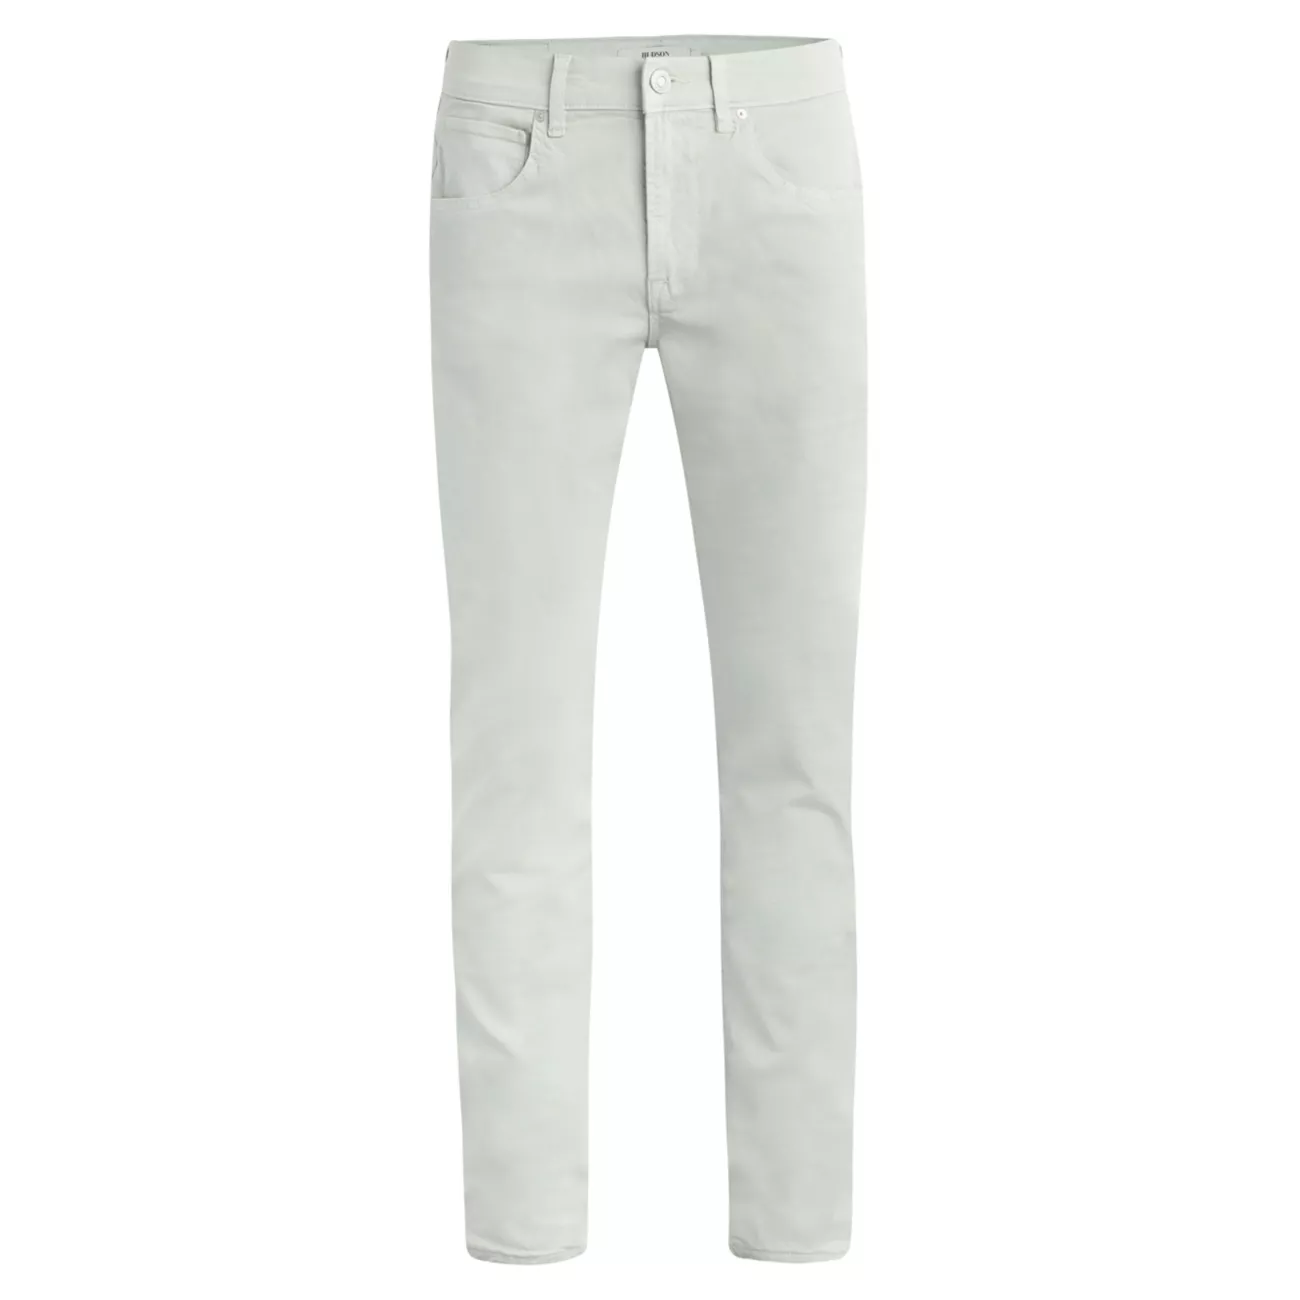 Узкие прямые эластичные джинсы Blake Hudson Jeans